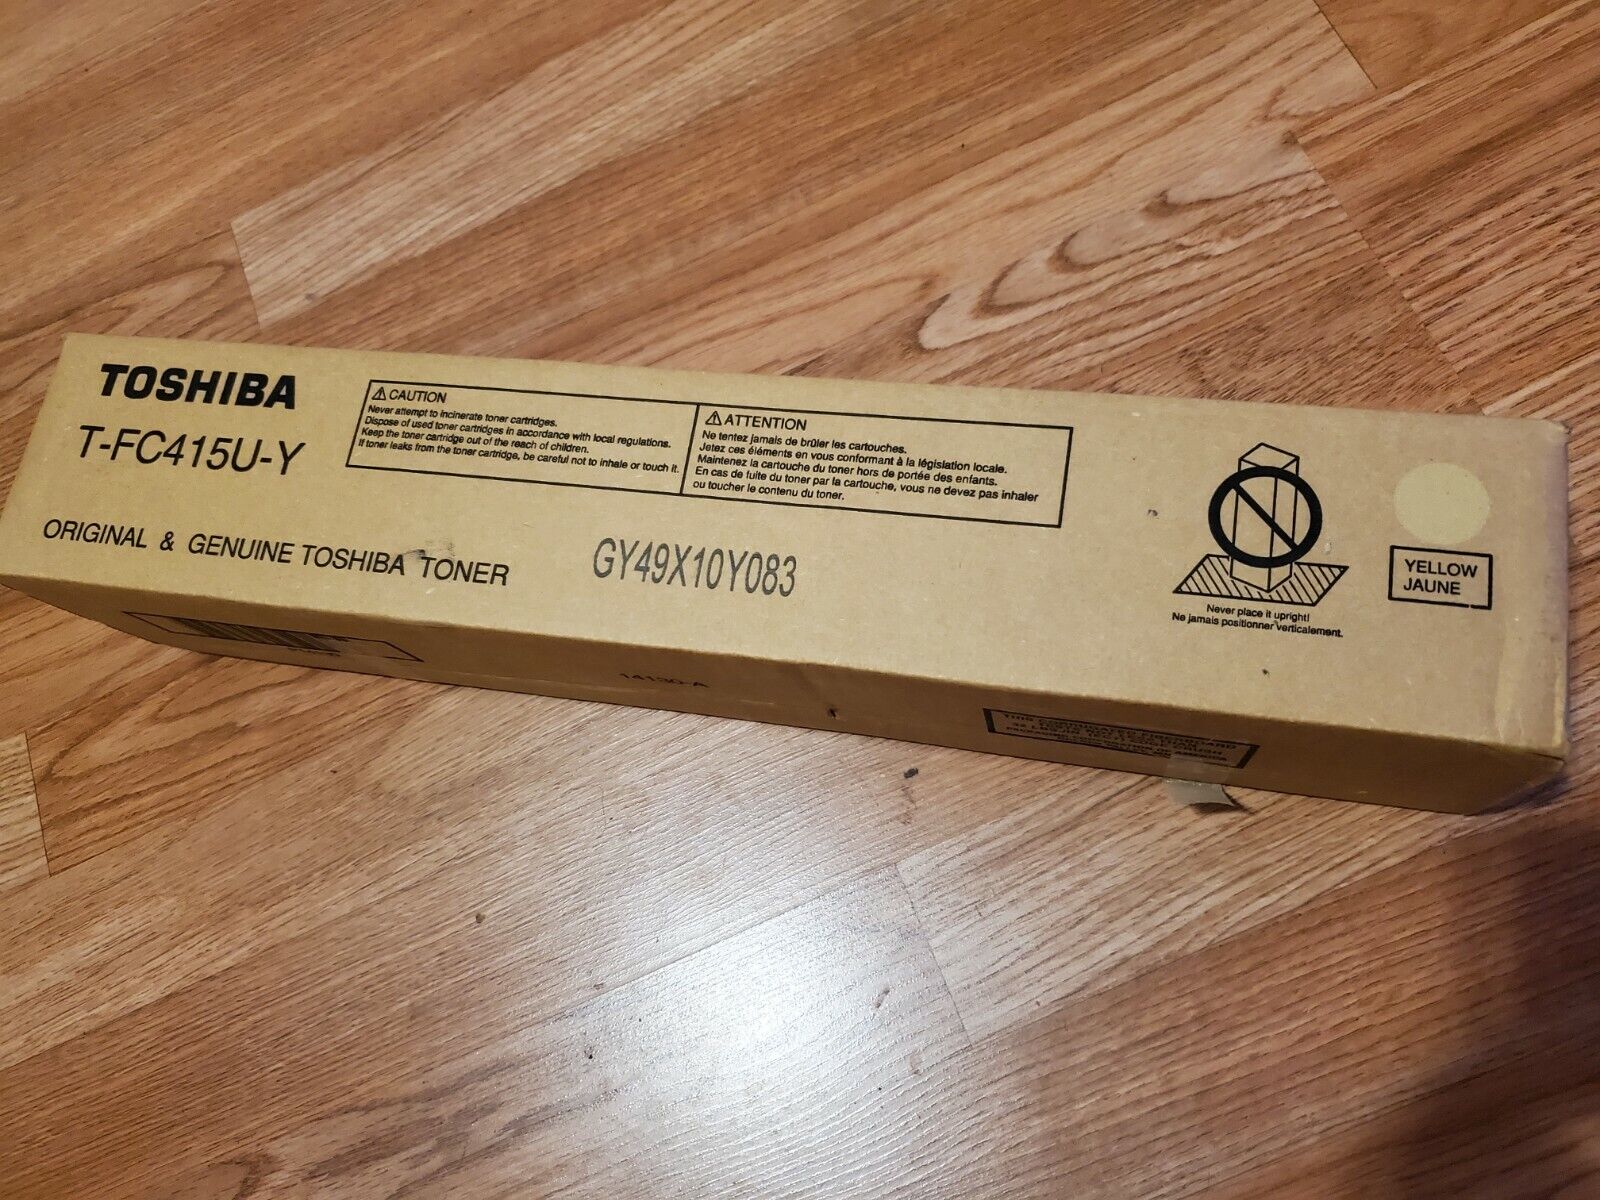 Toshiba T-FC415U-Y Print YELLOW Toner Cartridge NEW Factory Sealed BOX